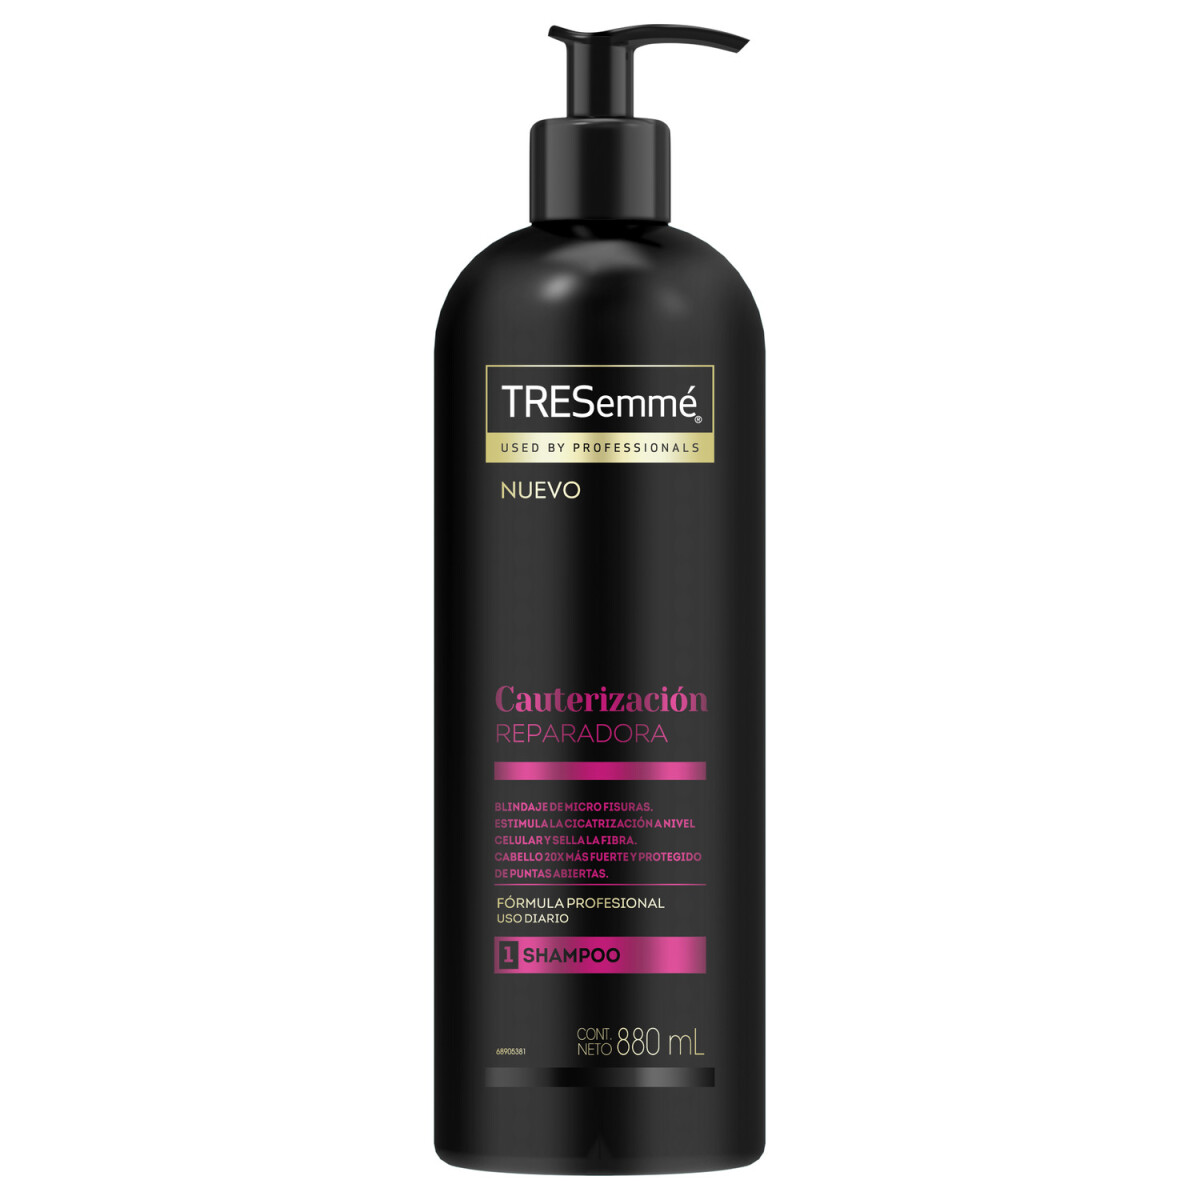 Tresemme Shampoo Cauterizaci�n Reparadora 880 ml 